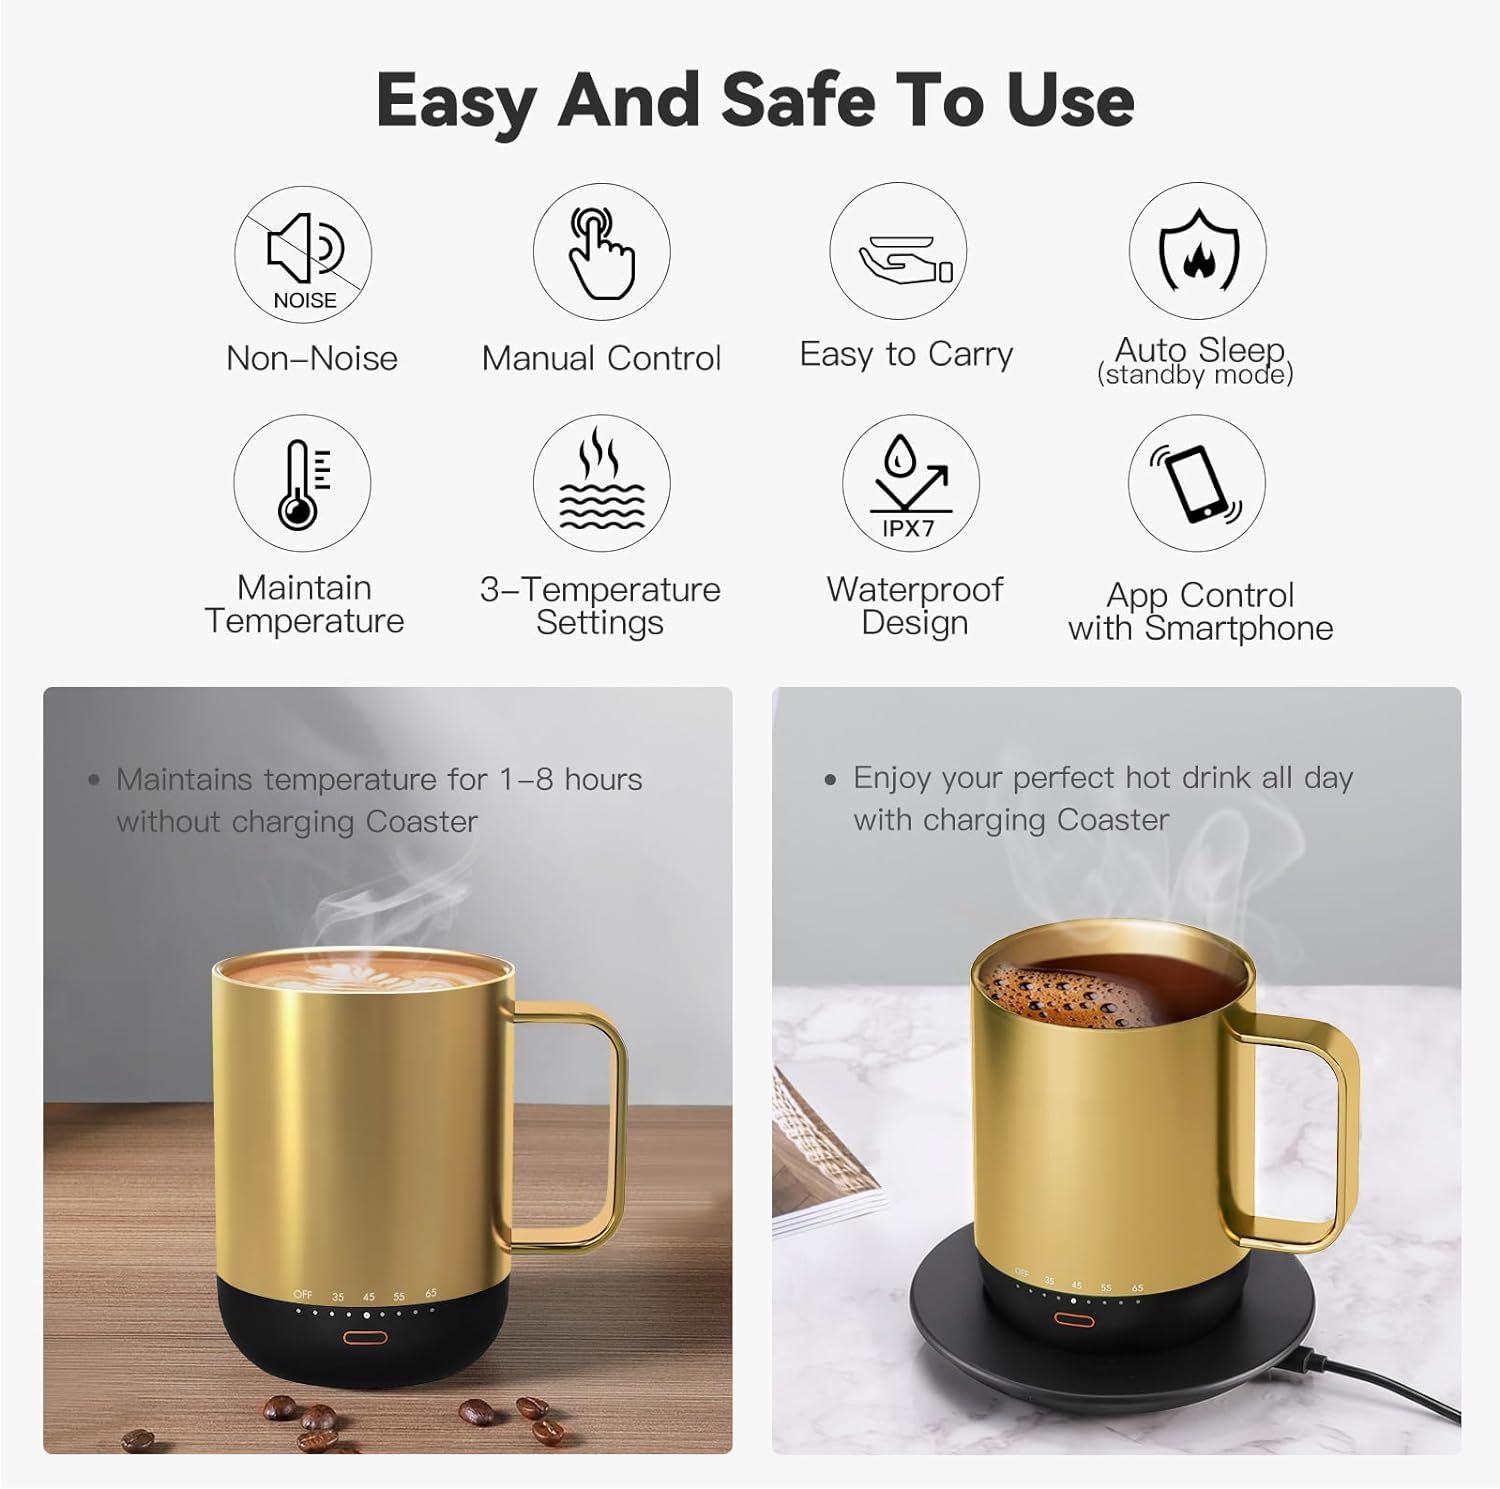 vsitoo S3 Temperature Control Smart Mug 2 with Lid, Self Heating Coffee Mug  10 oz, LED Display, 90 Min Battery Life - App&Manual Controlled Heated